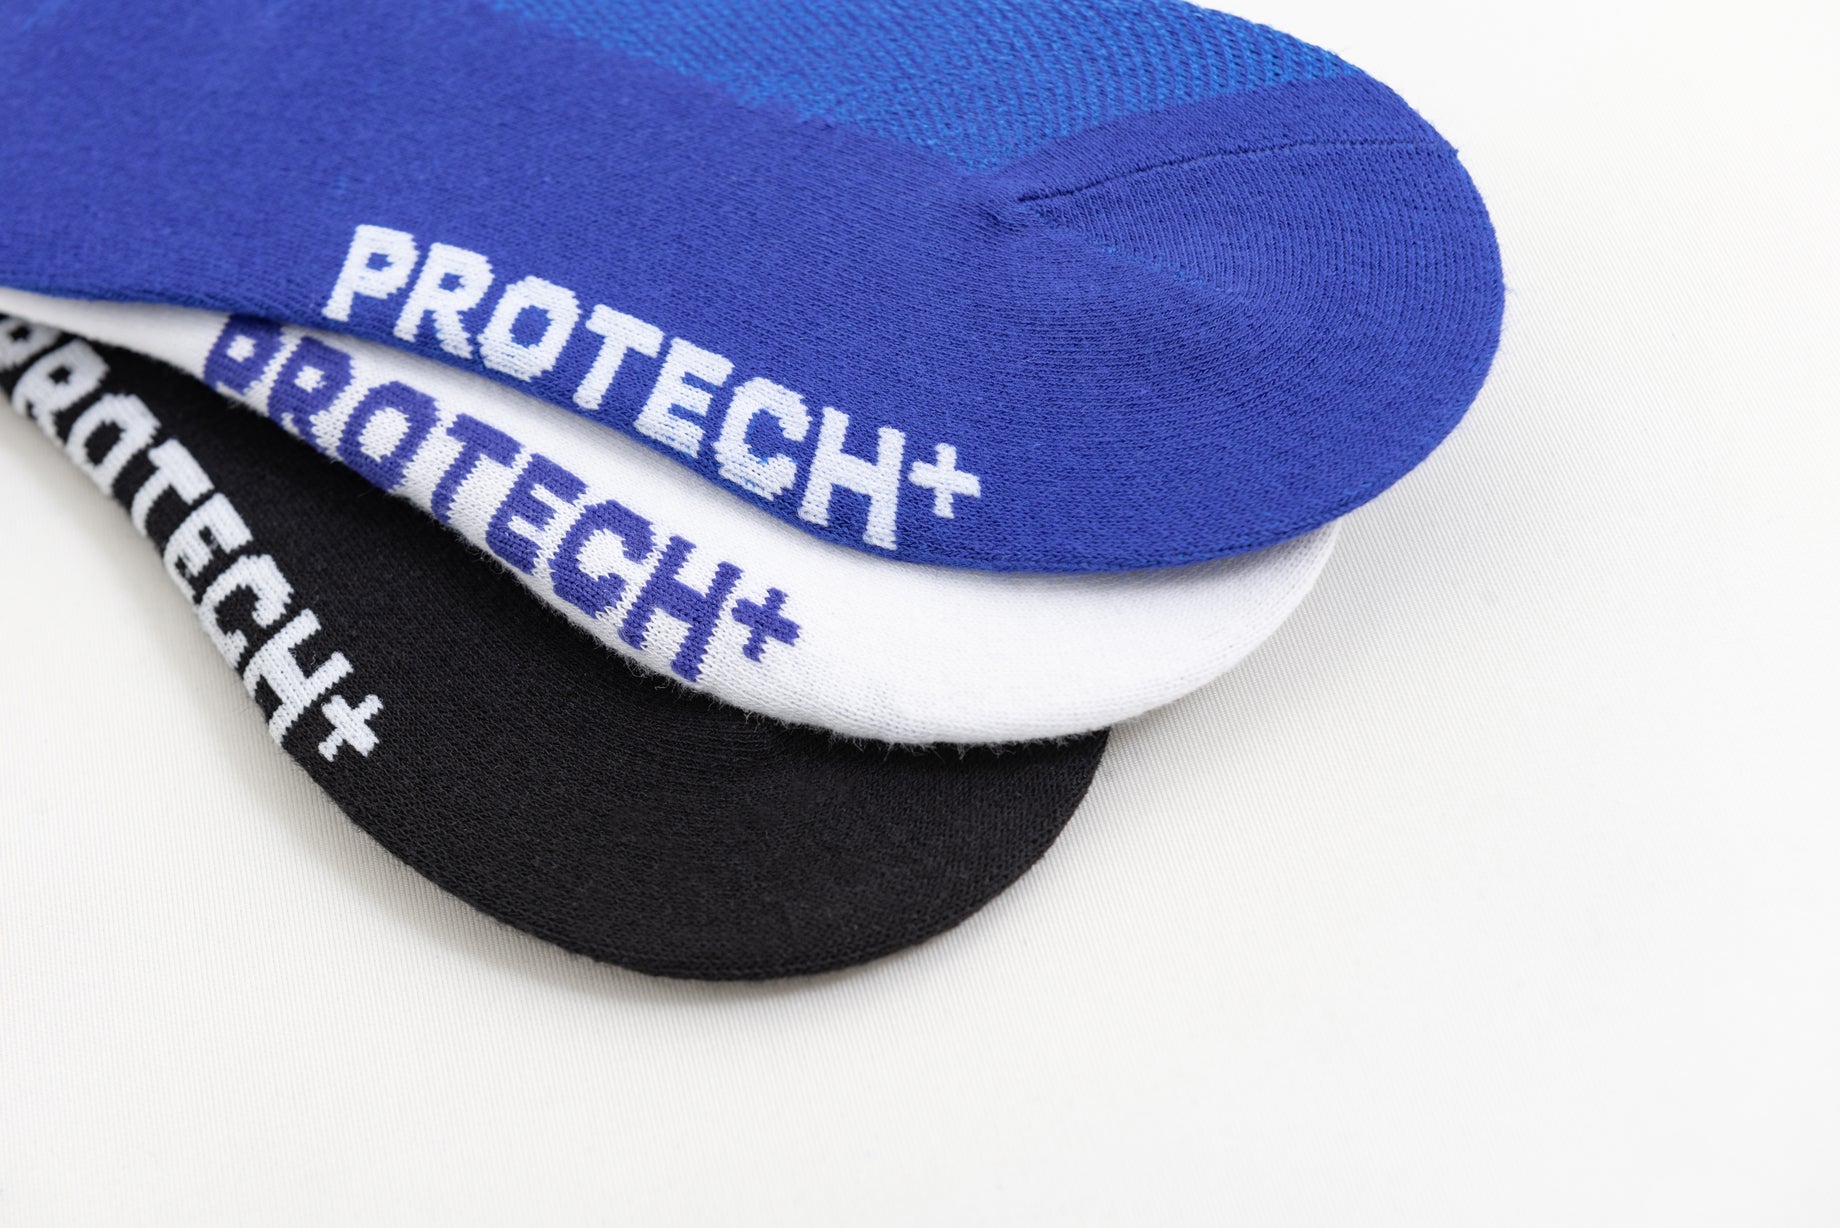 OMG® Protech No Show Sport Socks